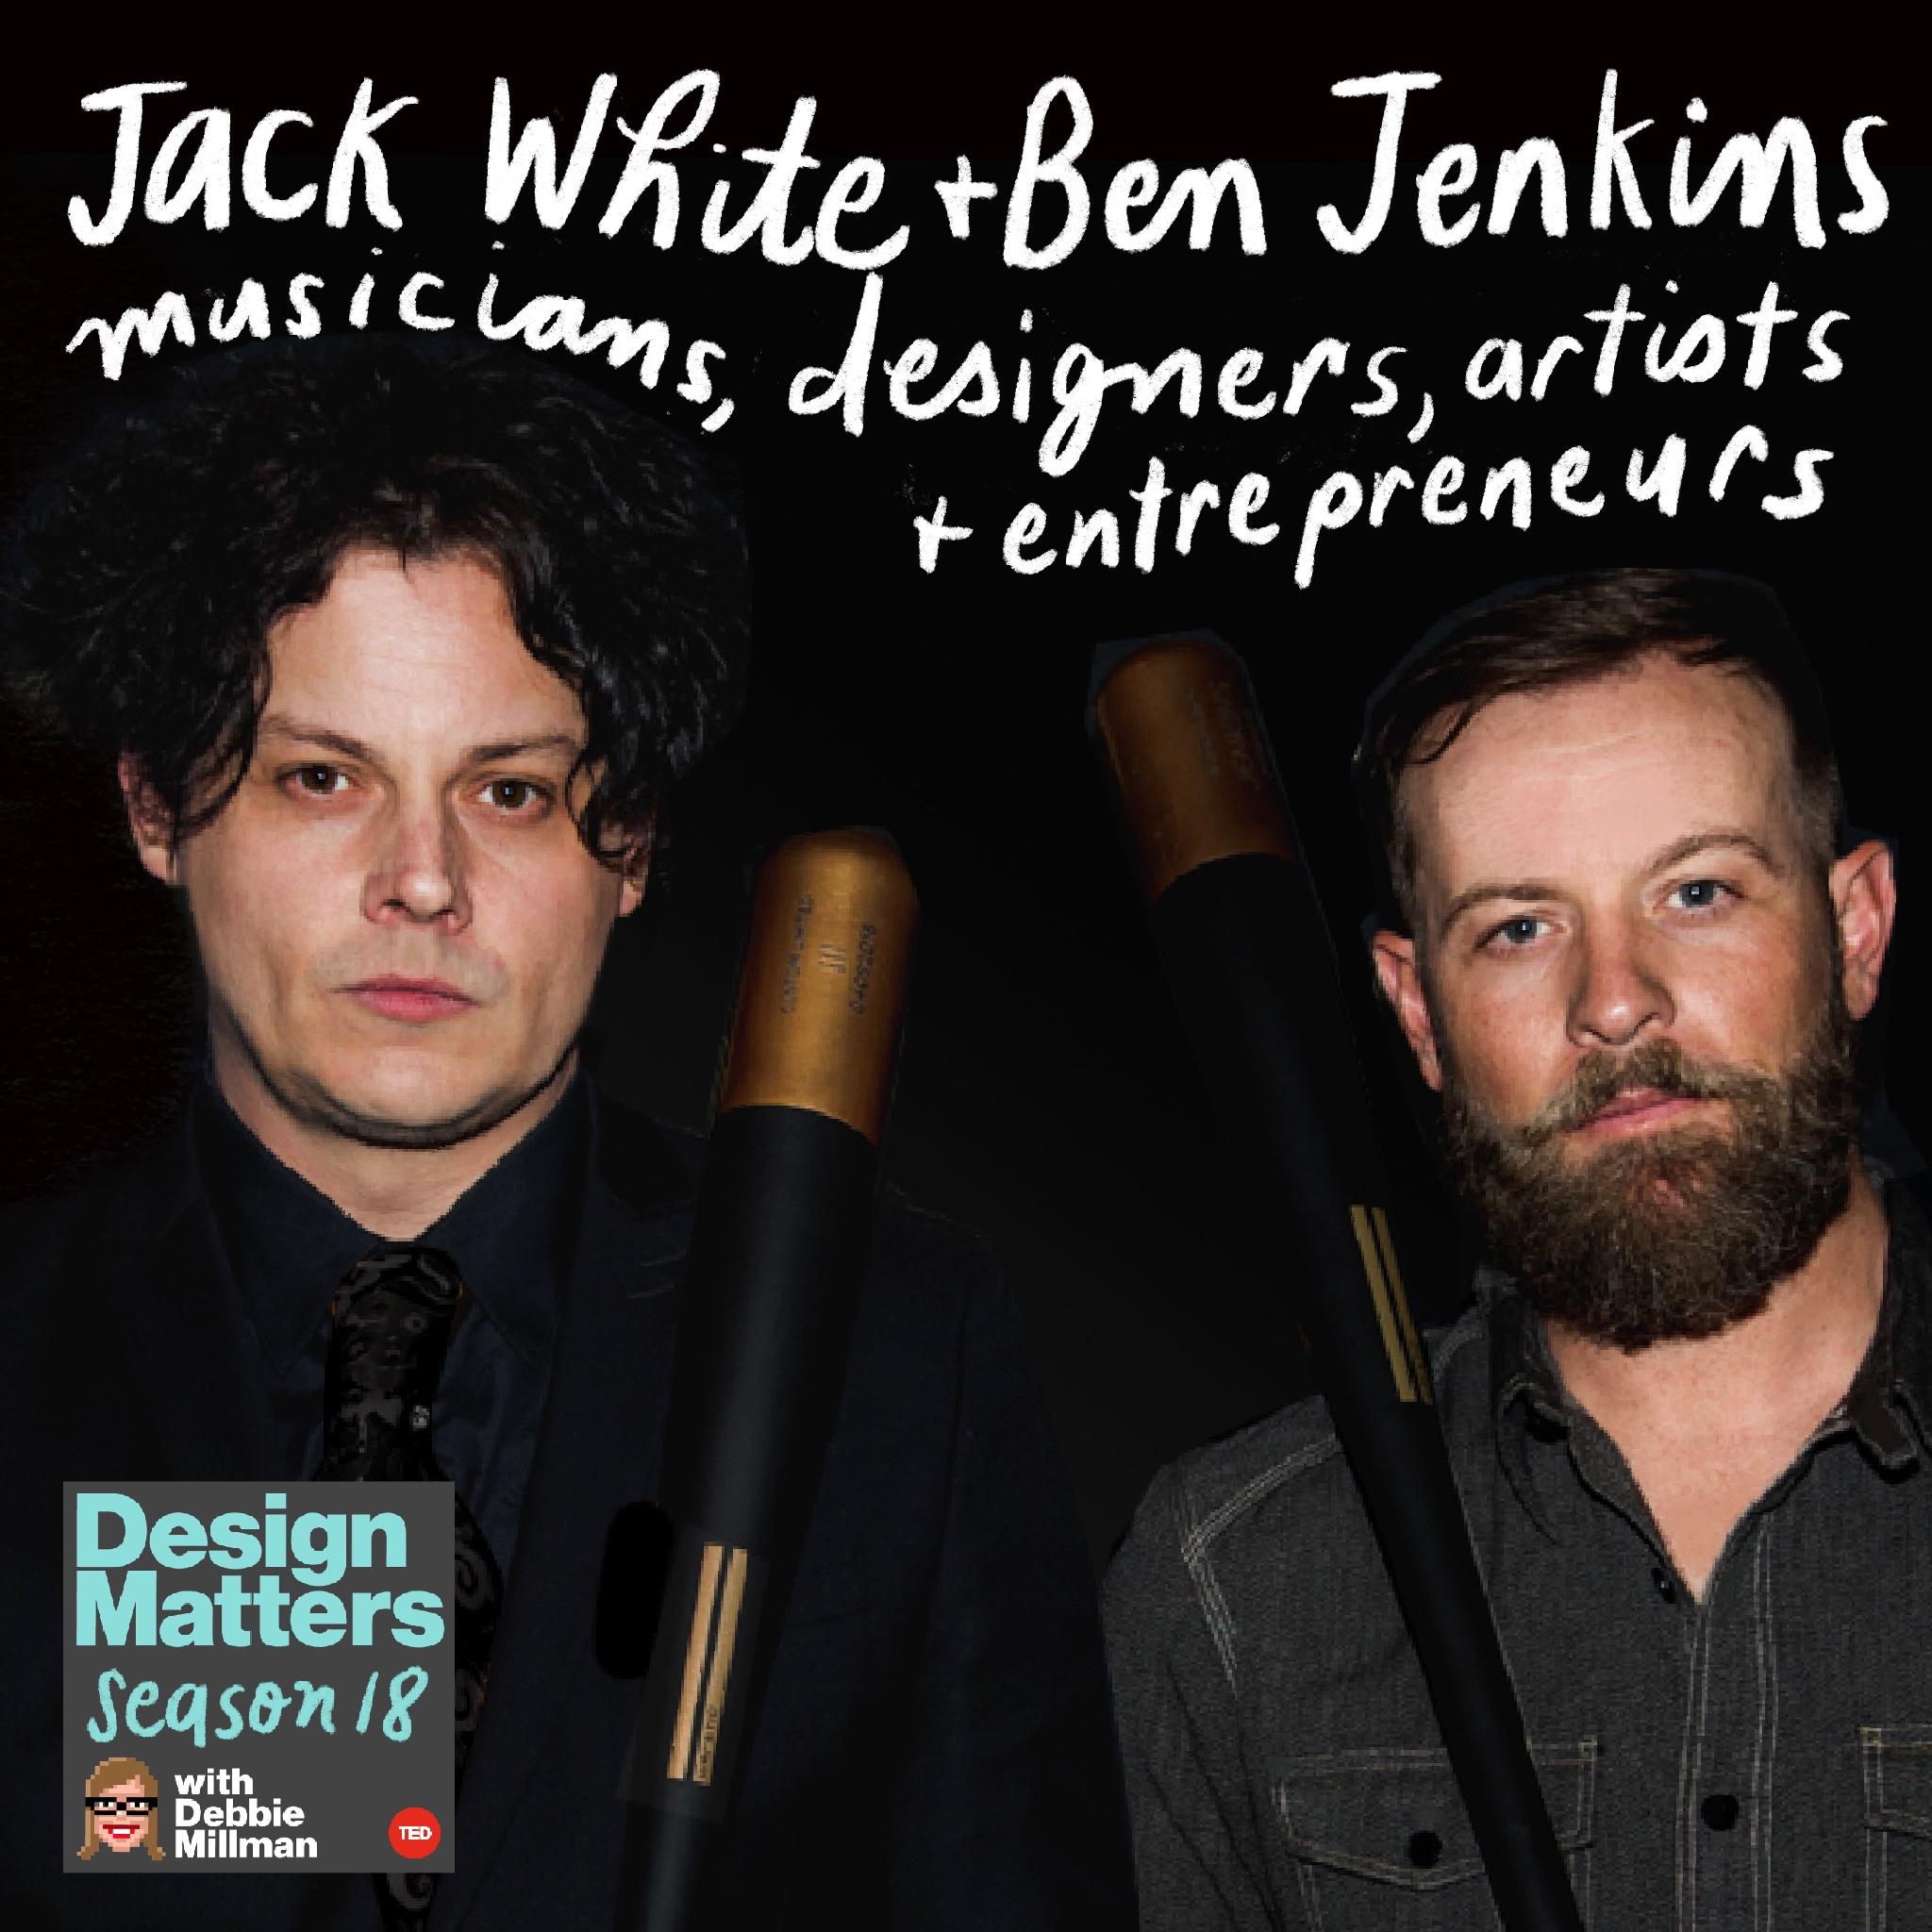 Thumbnail for "Jack White and Ben Jenkins".